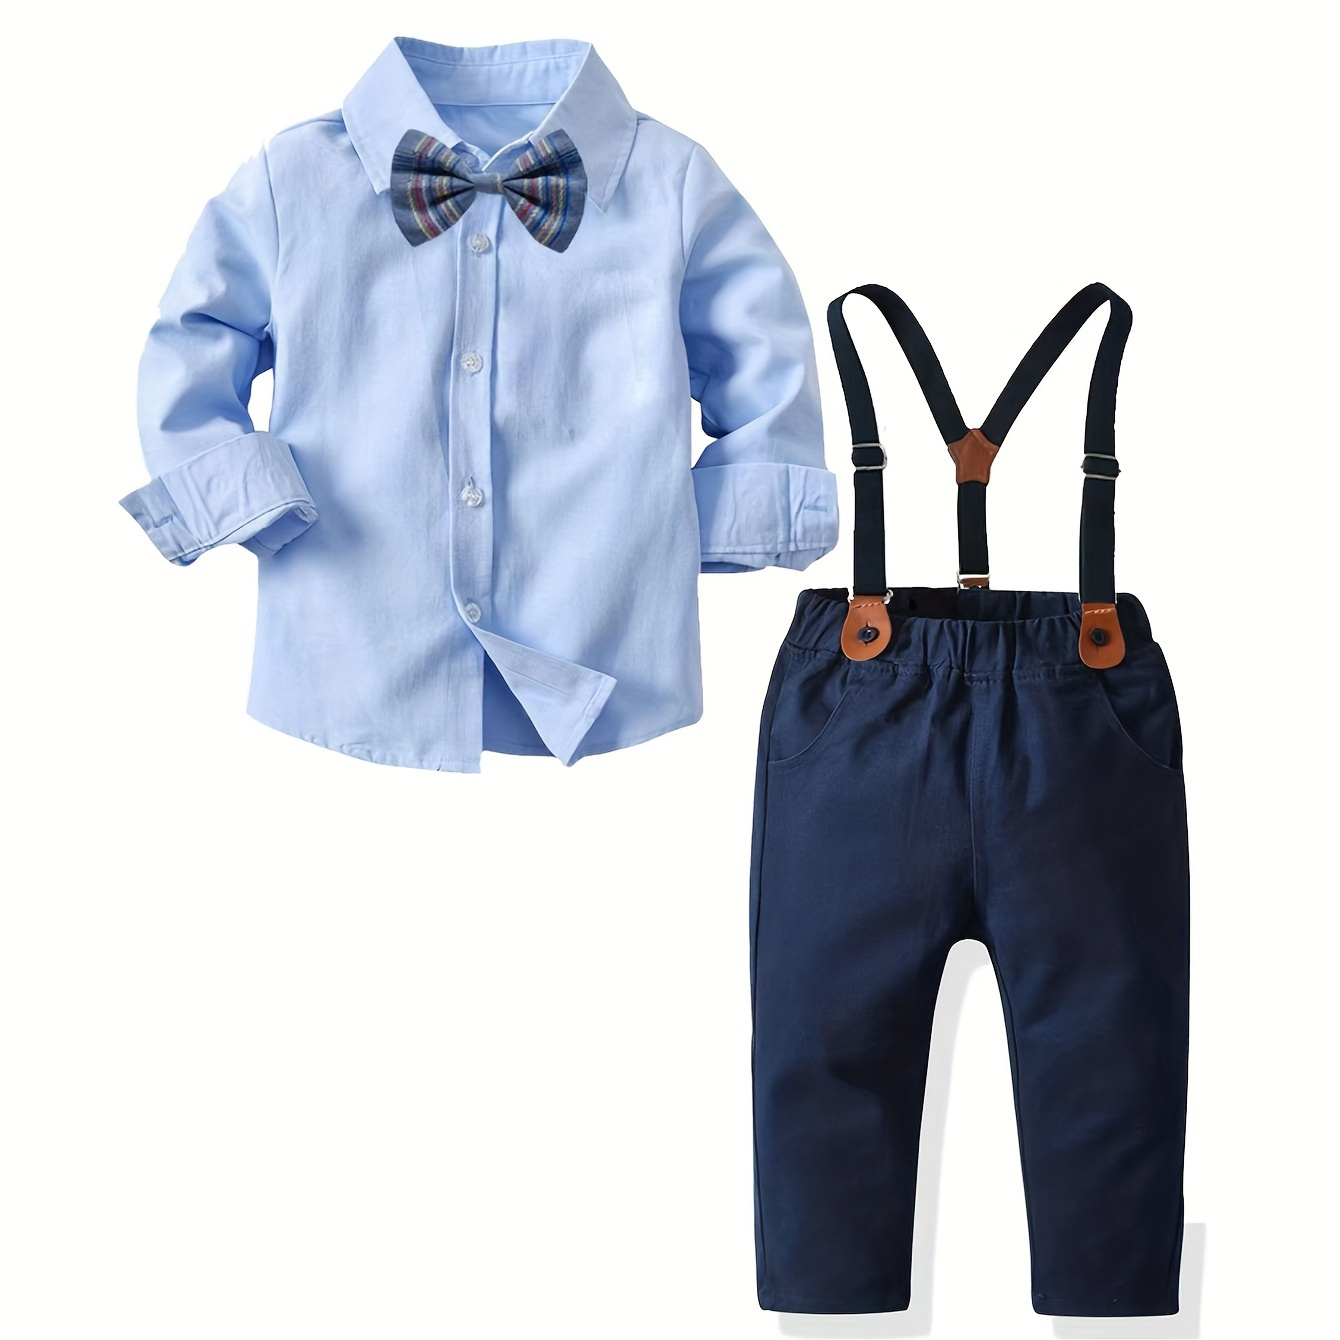 

Boys Gentleman Outfit Long Sleeve Button Bowtie Shirt Top & Suspender Pants Set Kids Clothes